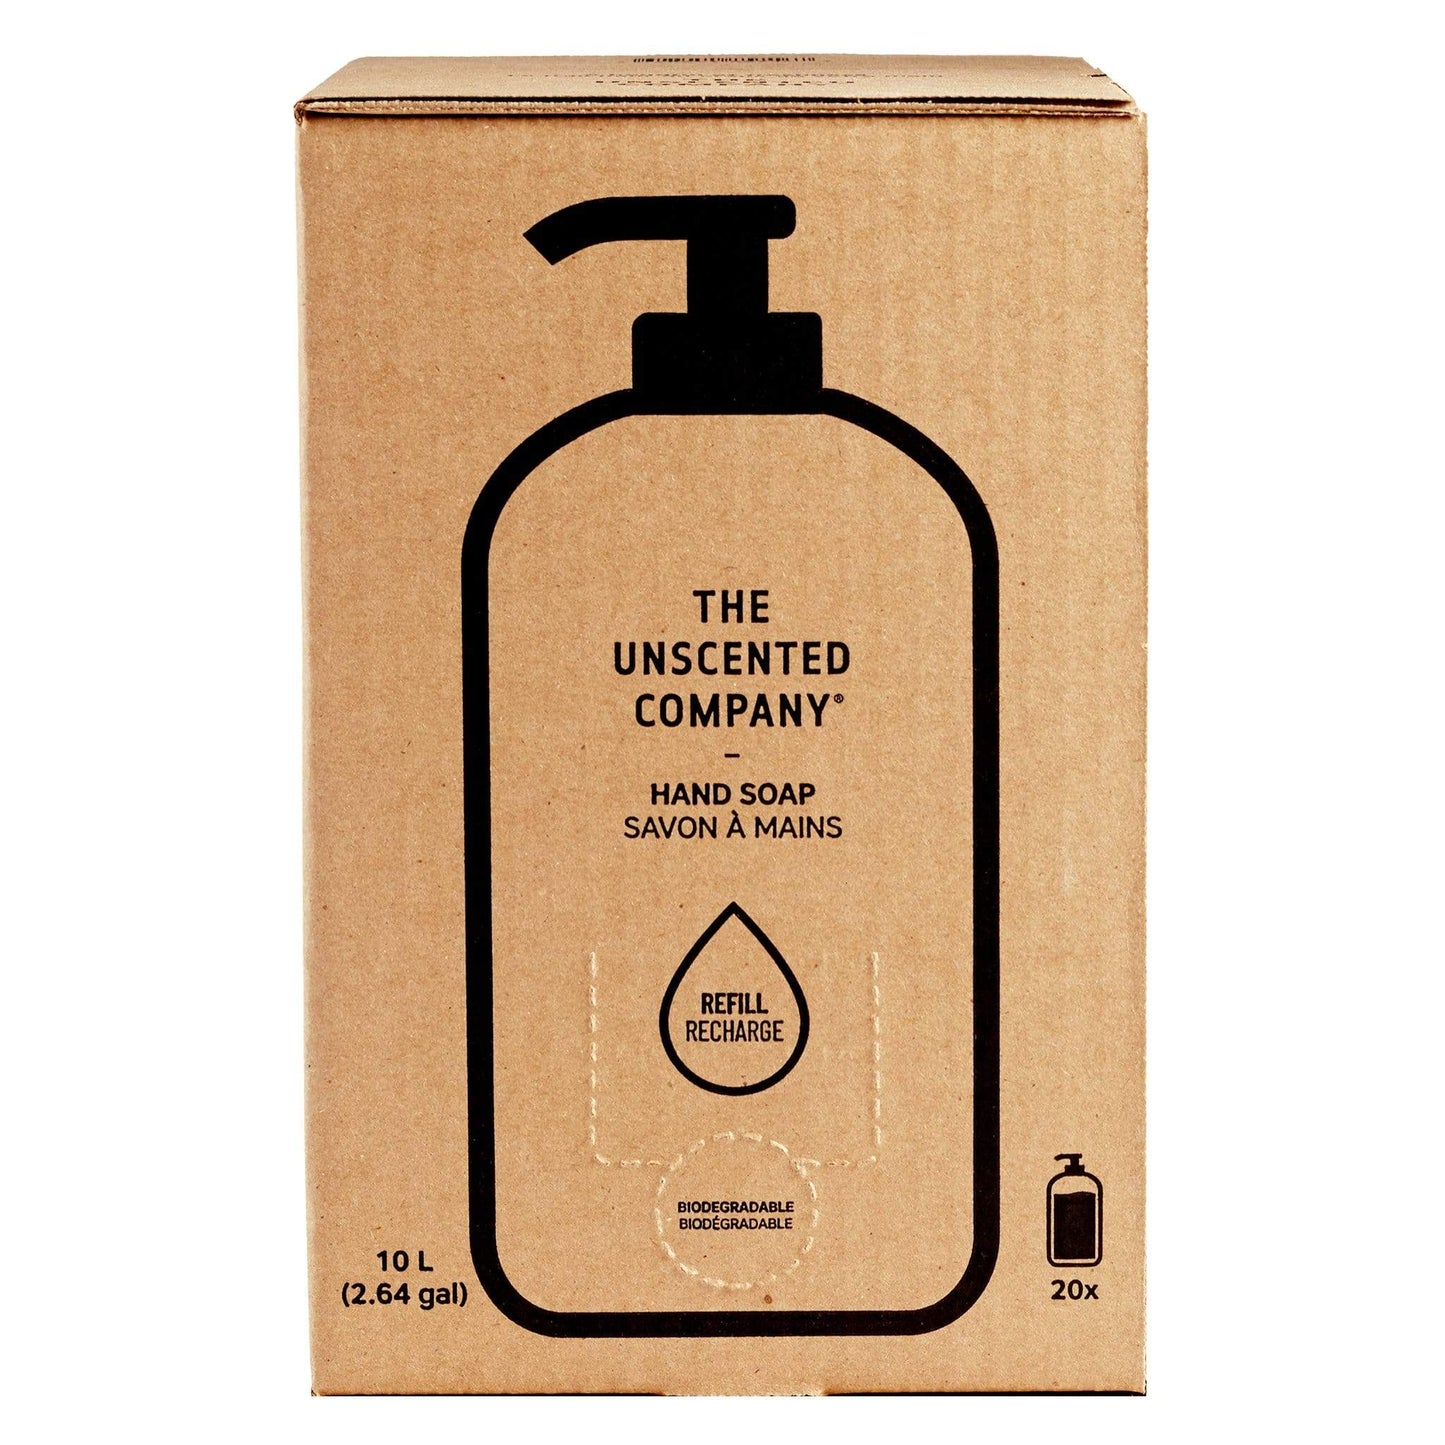 The Unscented Company - Hand Soap - 10L Refill Box